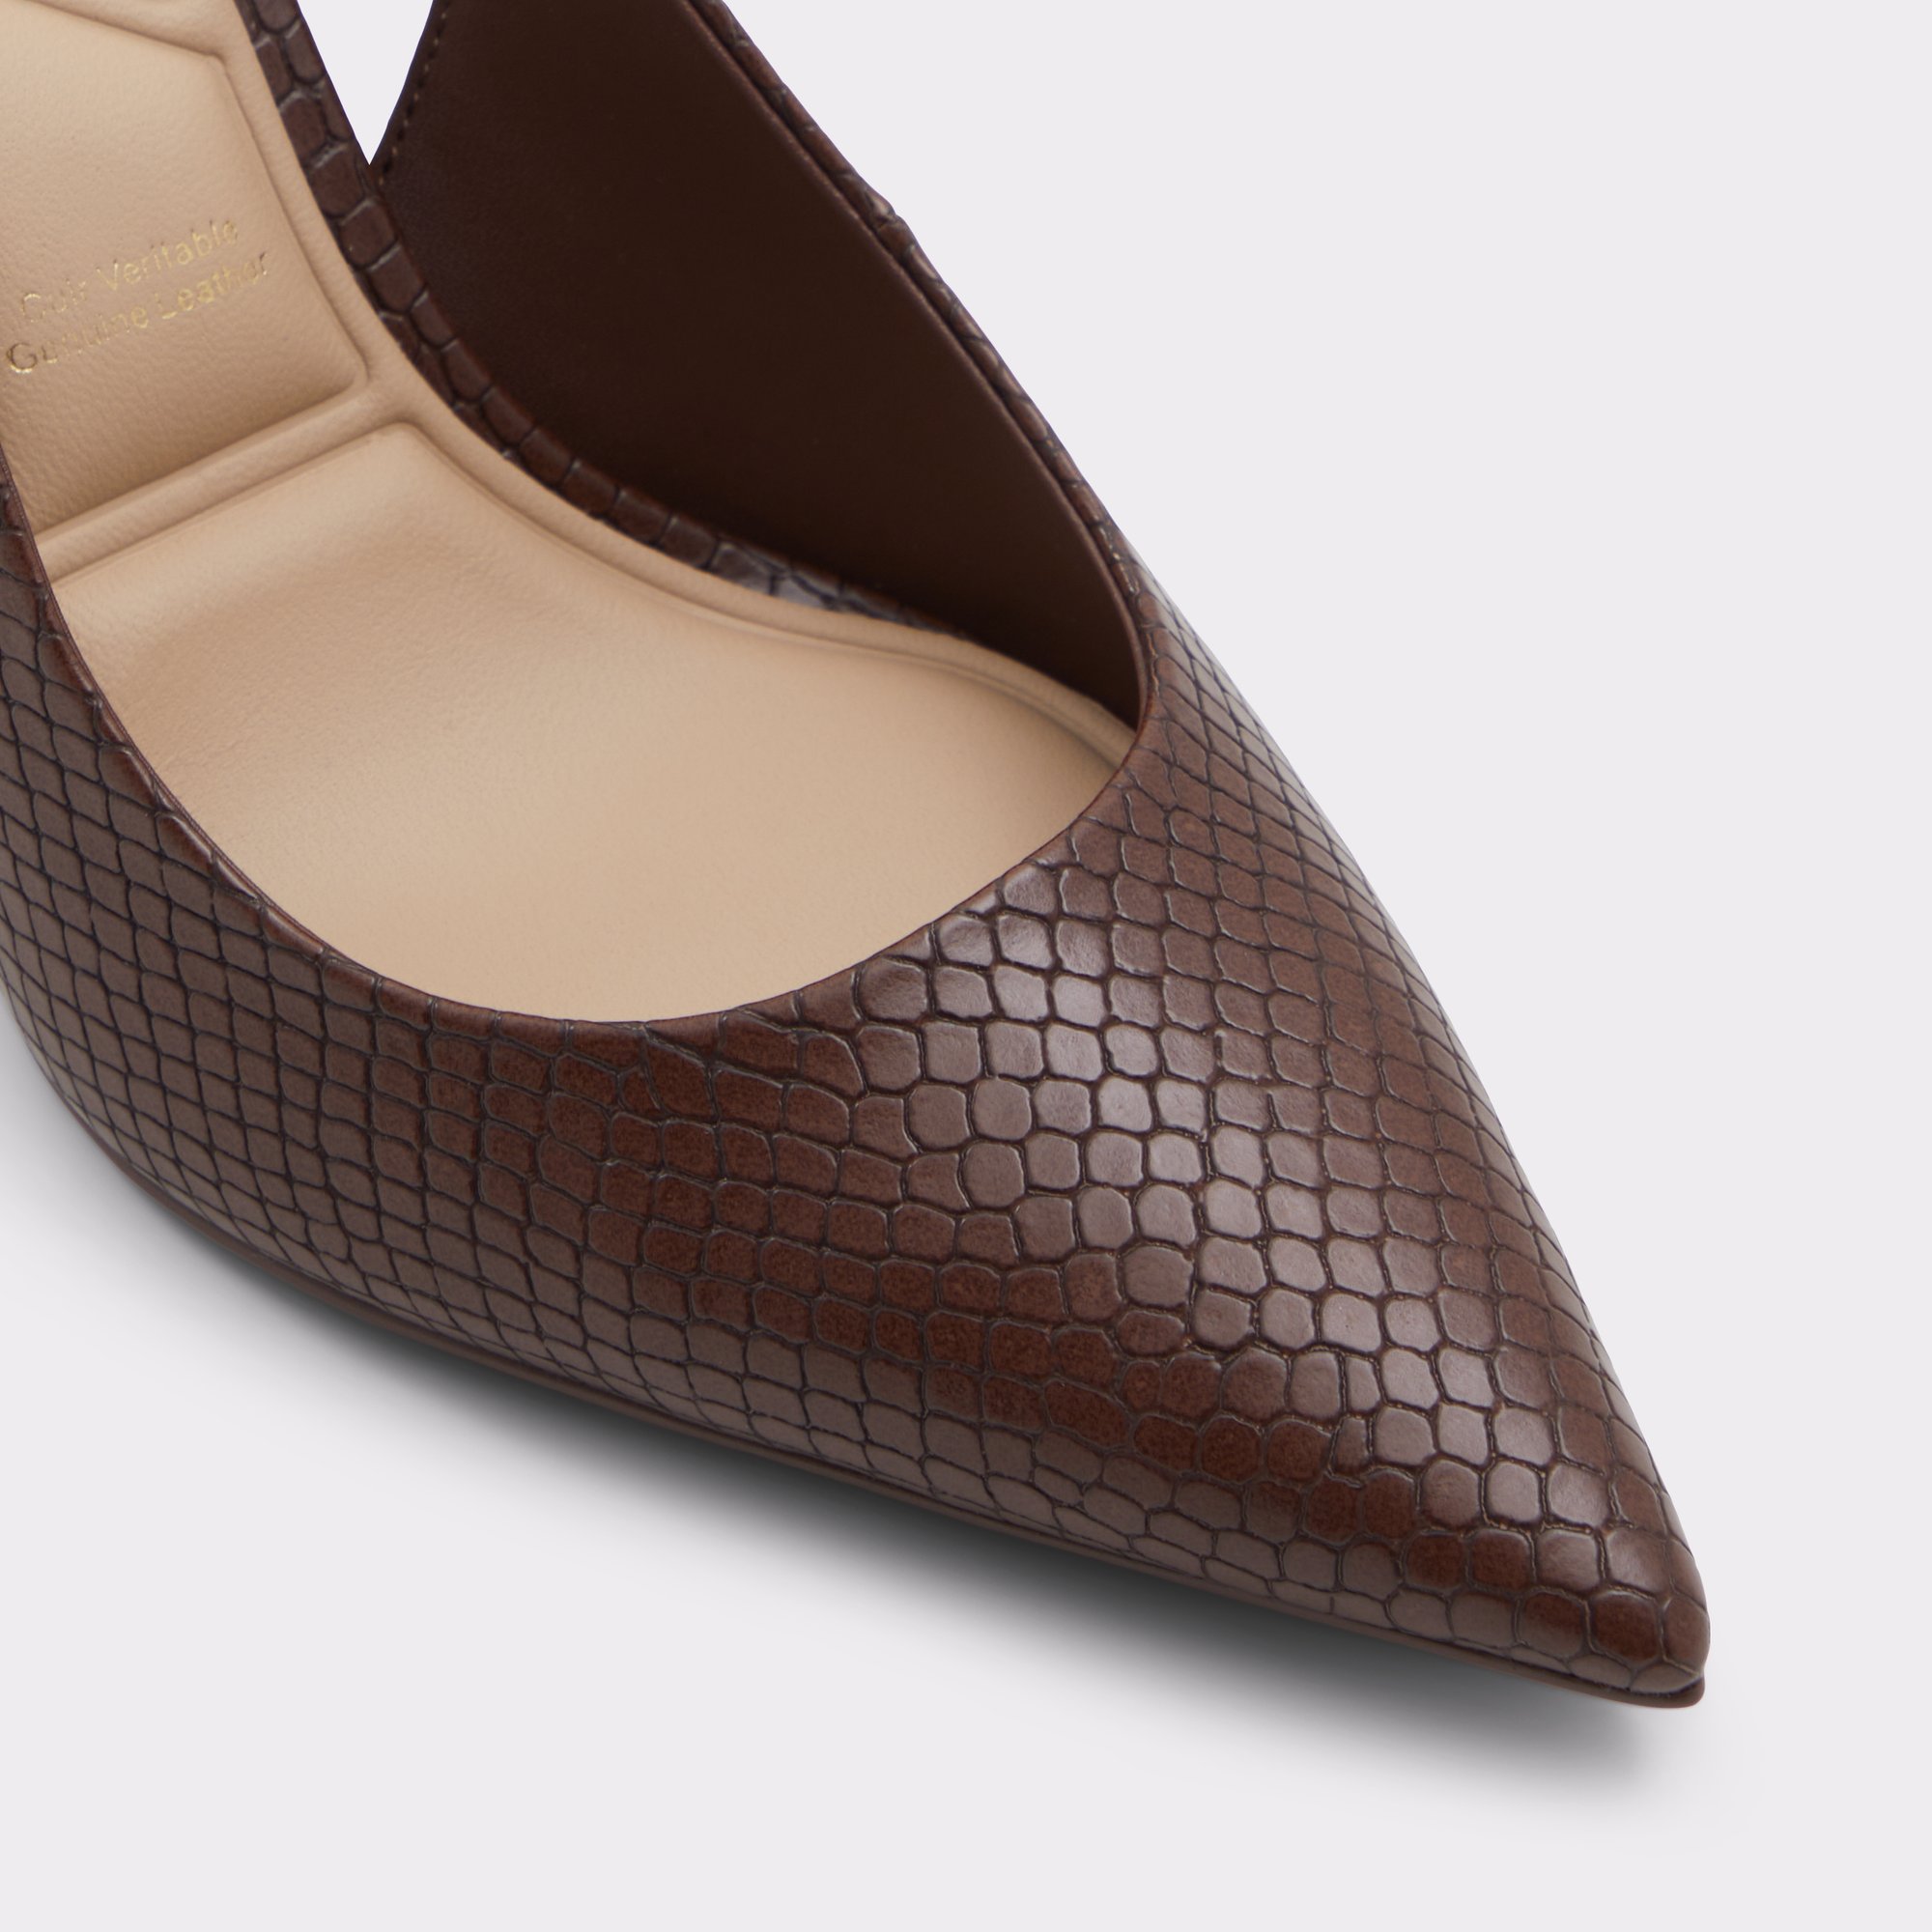 DKNY Women's Leather Pump High Heel Shoes (Brown, Size 8B) - Đức An Phát